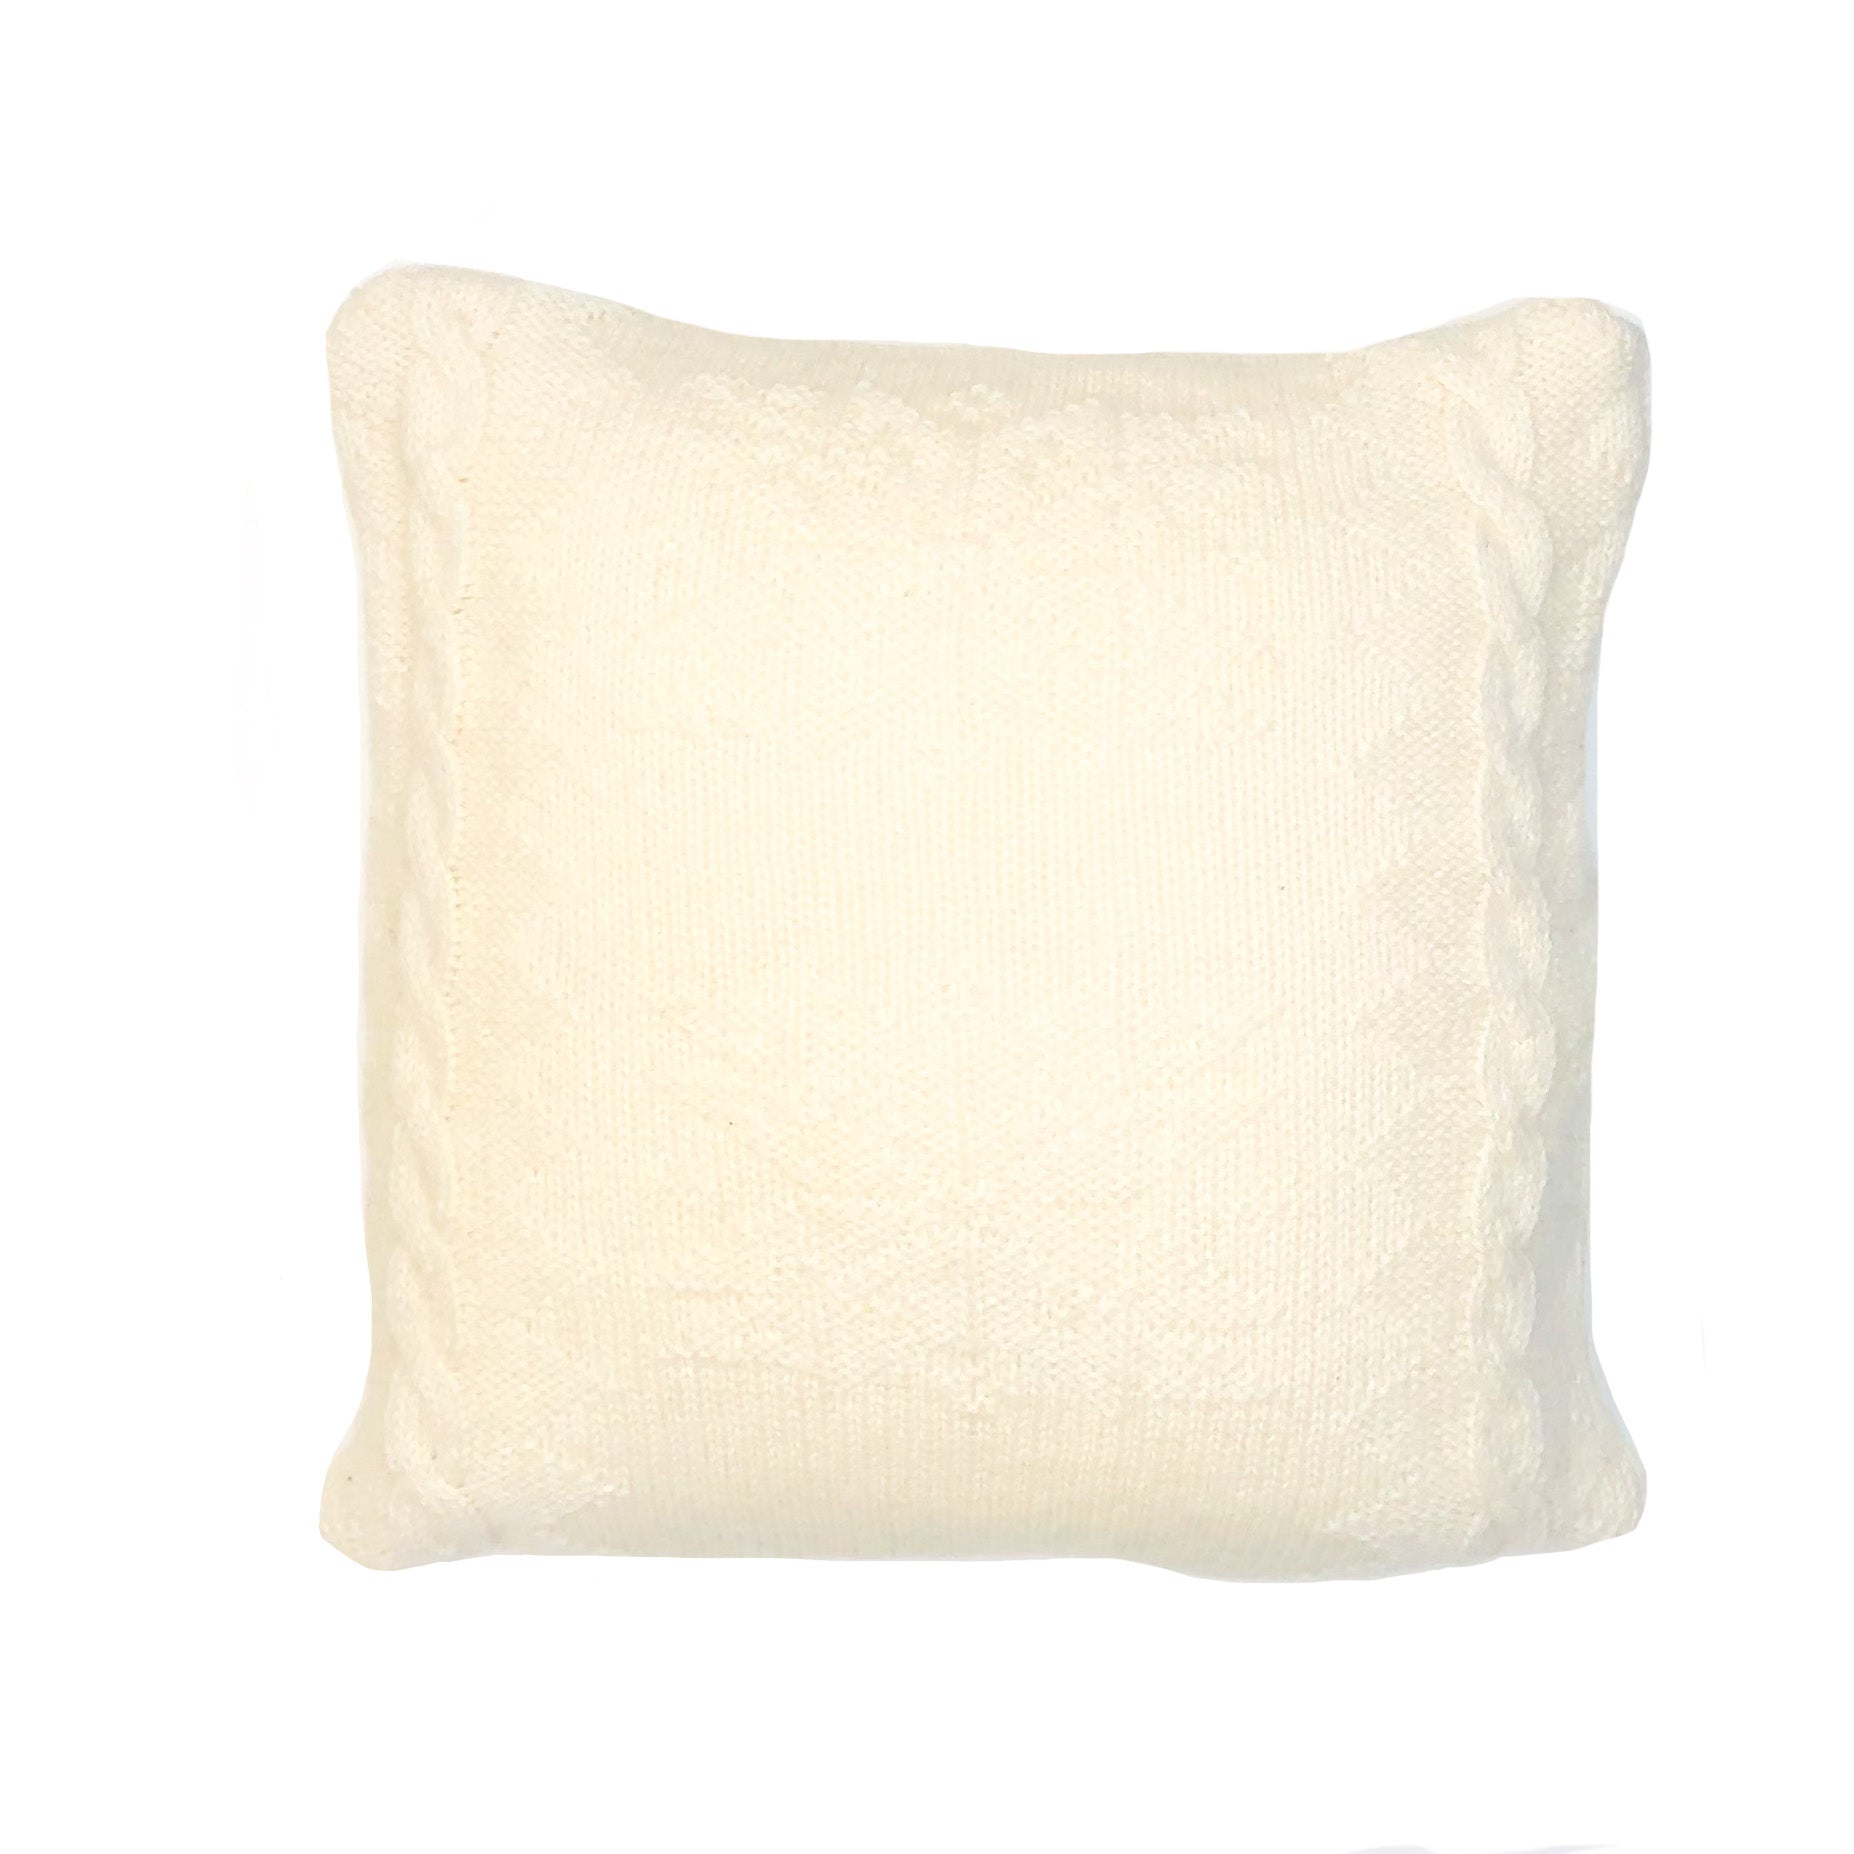 14 x 14 Cream Wool Pillow Cover